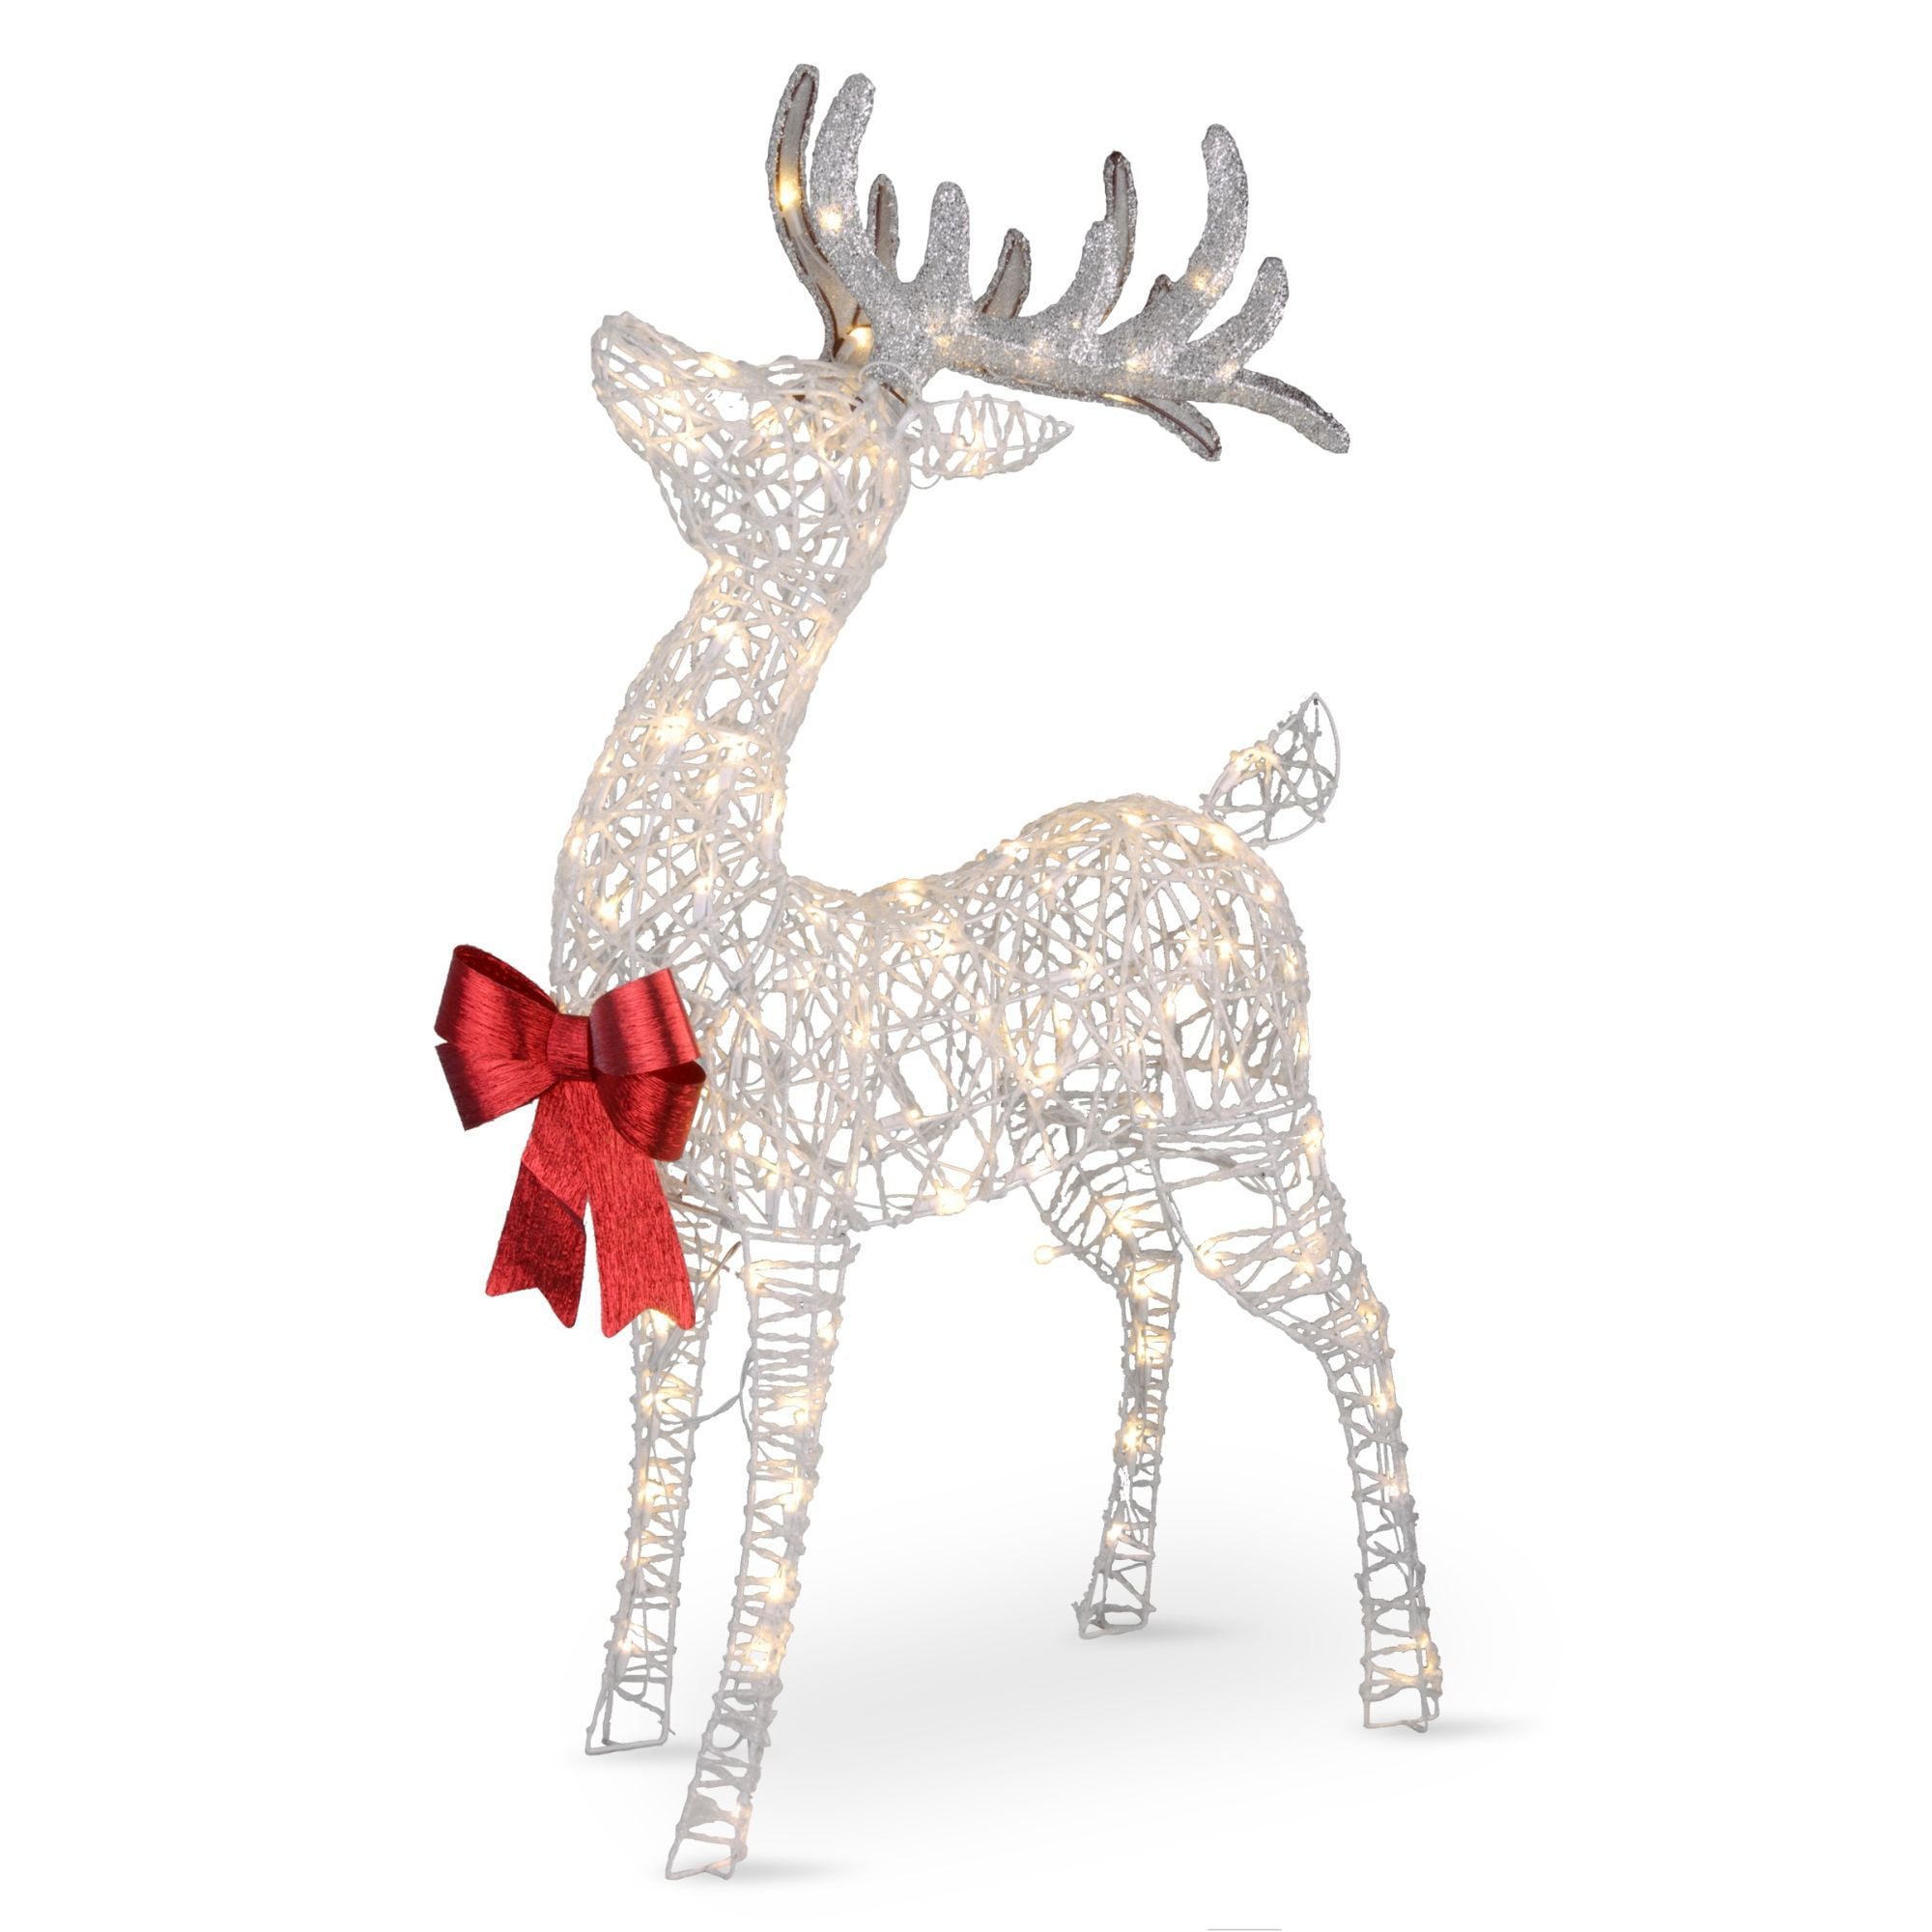 WalMart Happy Holidays Illuminated Reindeer Christmas 2019 Gift Card FD-65821 